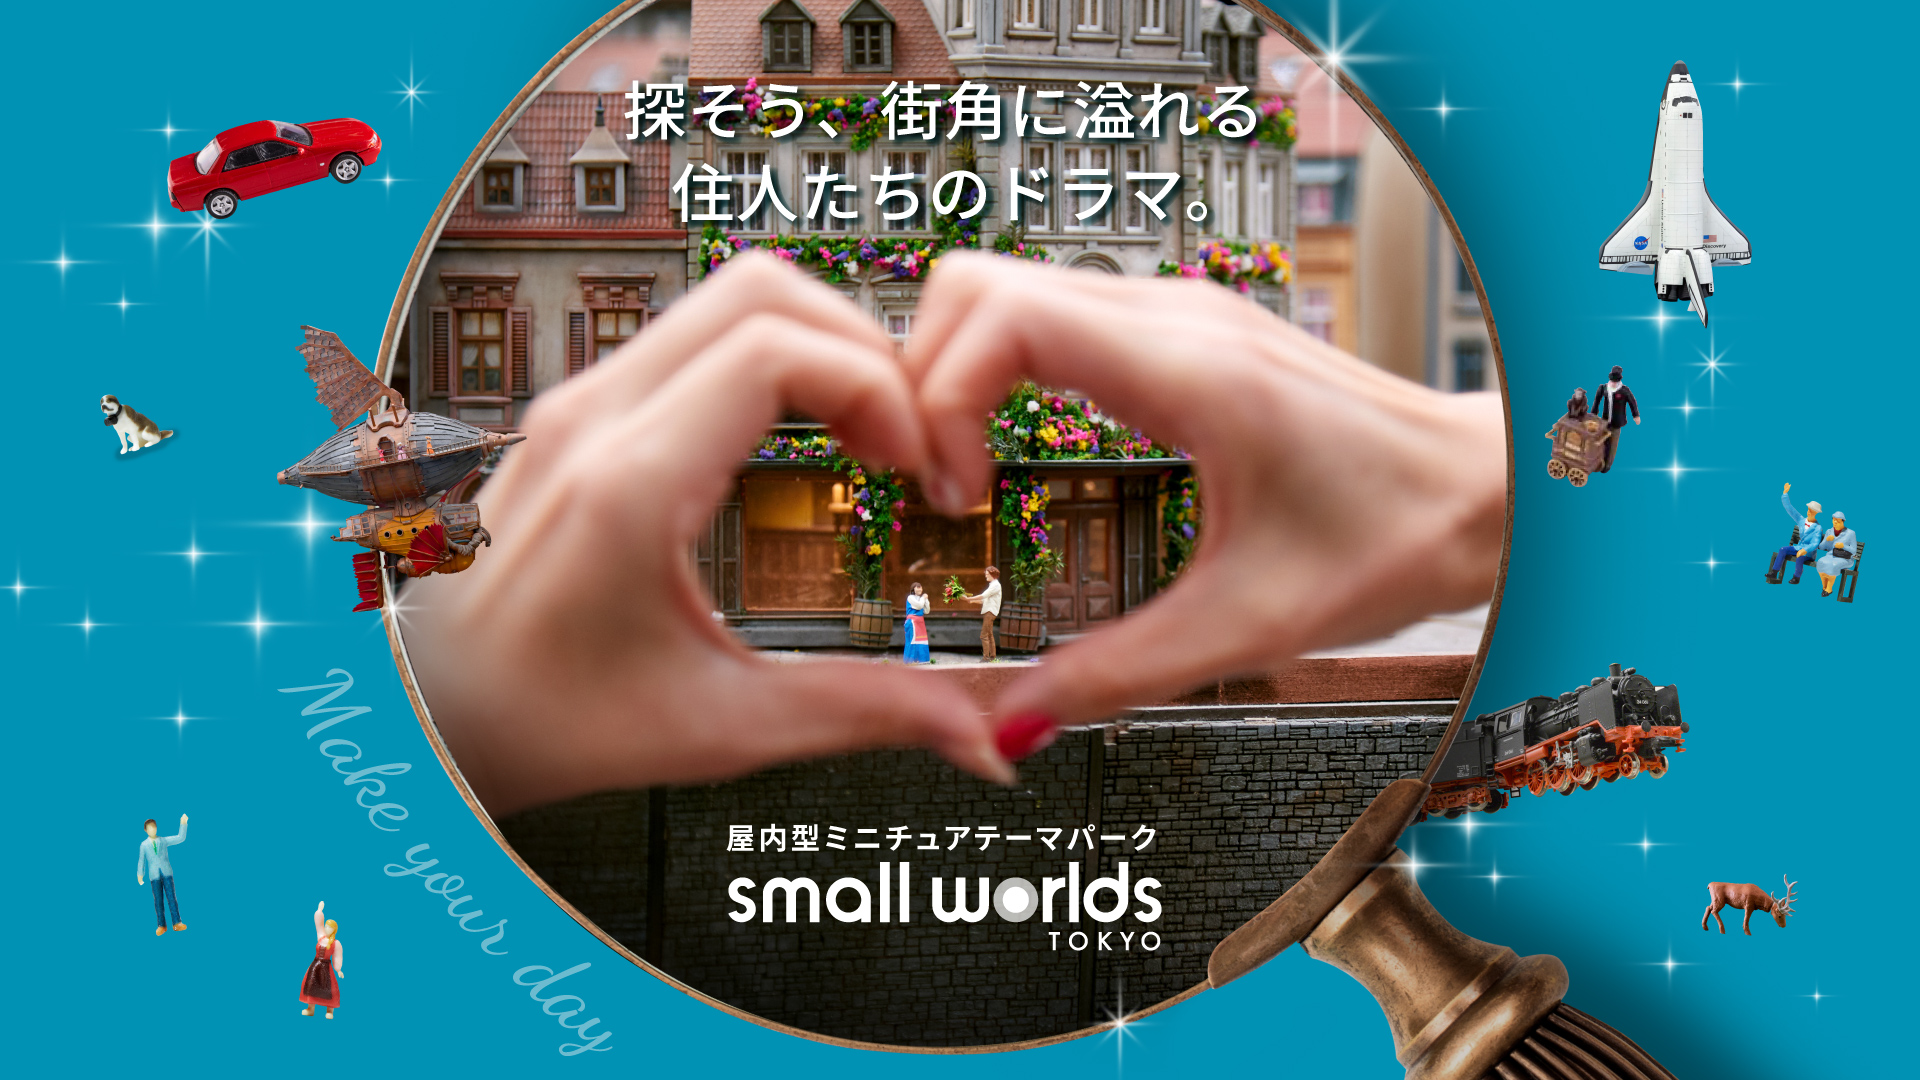 SKYTREE® ENJOY PACK SMALL WORLDS miniature museum Plan